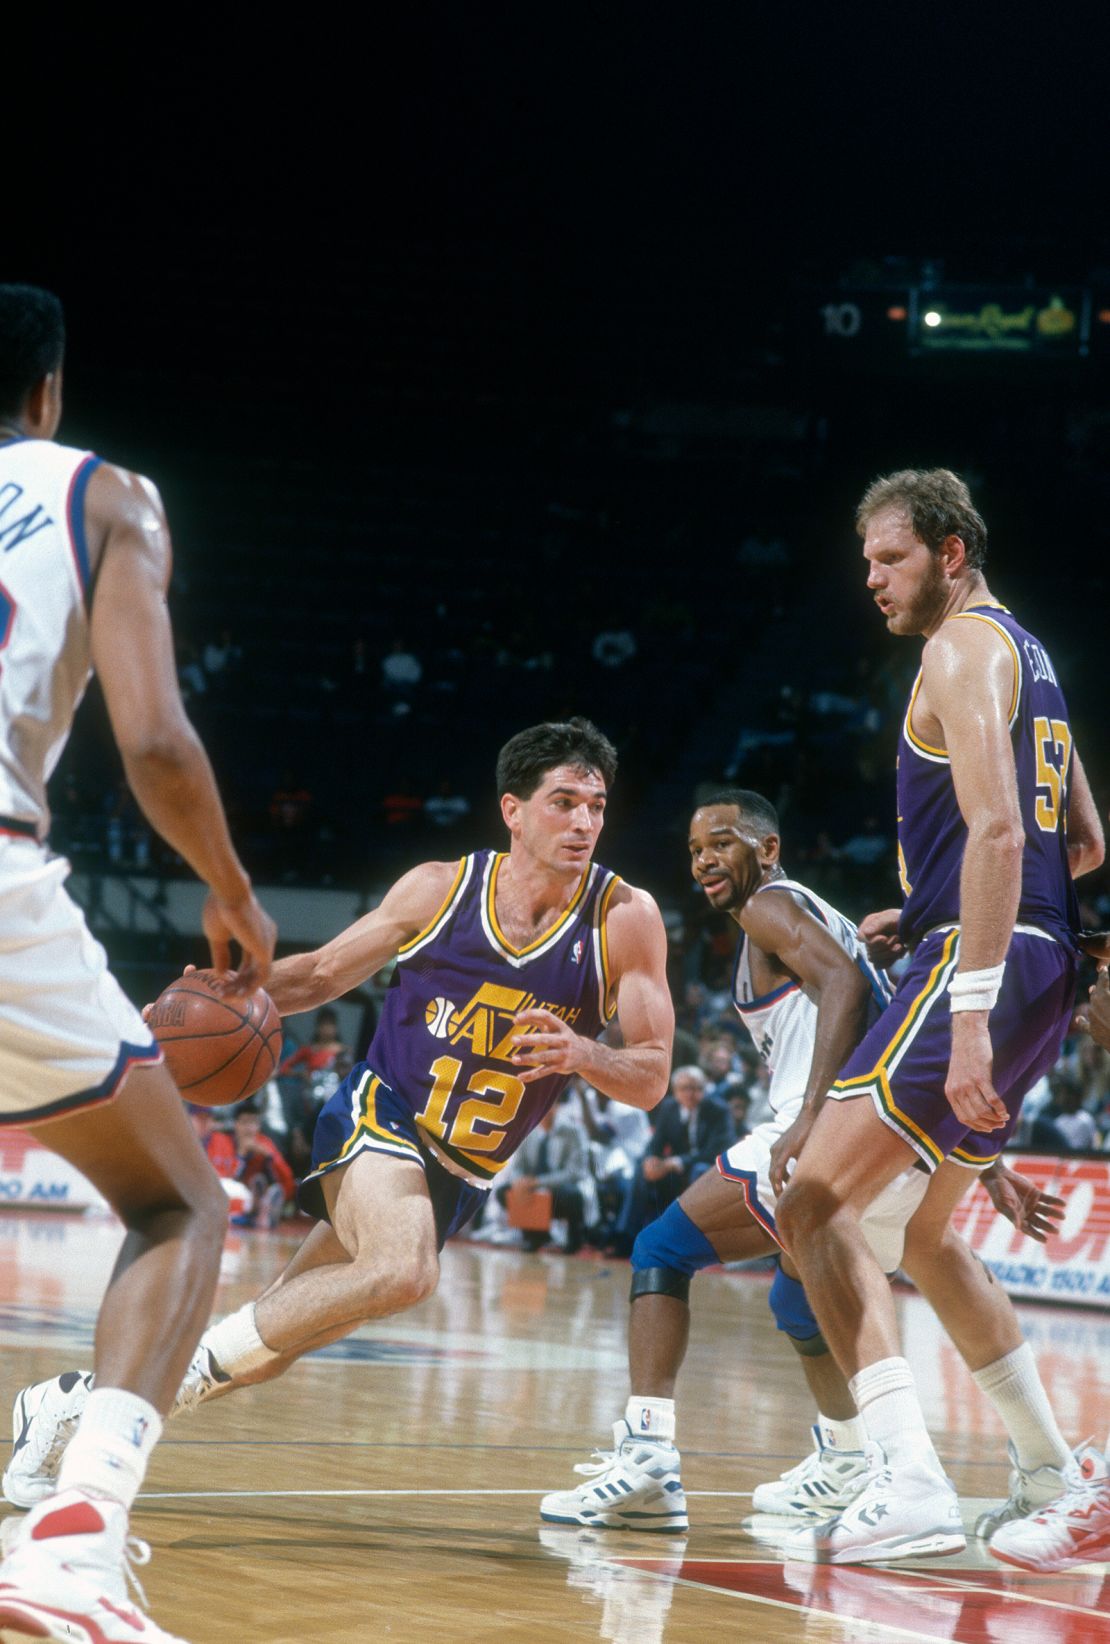 John Stockton of the Utah Jazz drives towards the basket past Michael Adams (#10) of the Washington Bullets during a 1991 NBA basketball game.